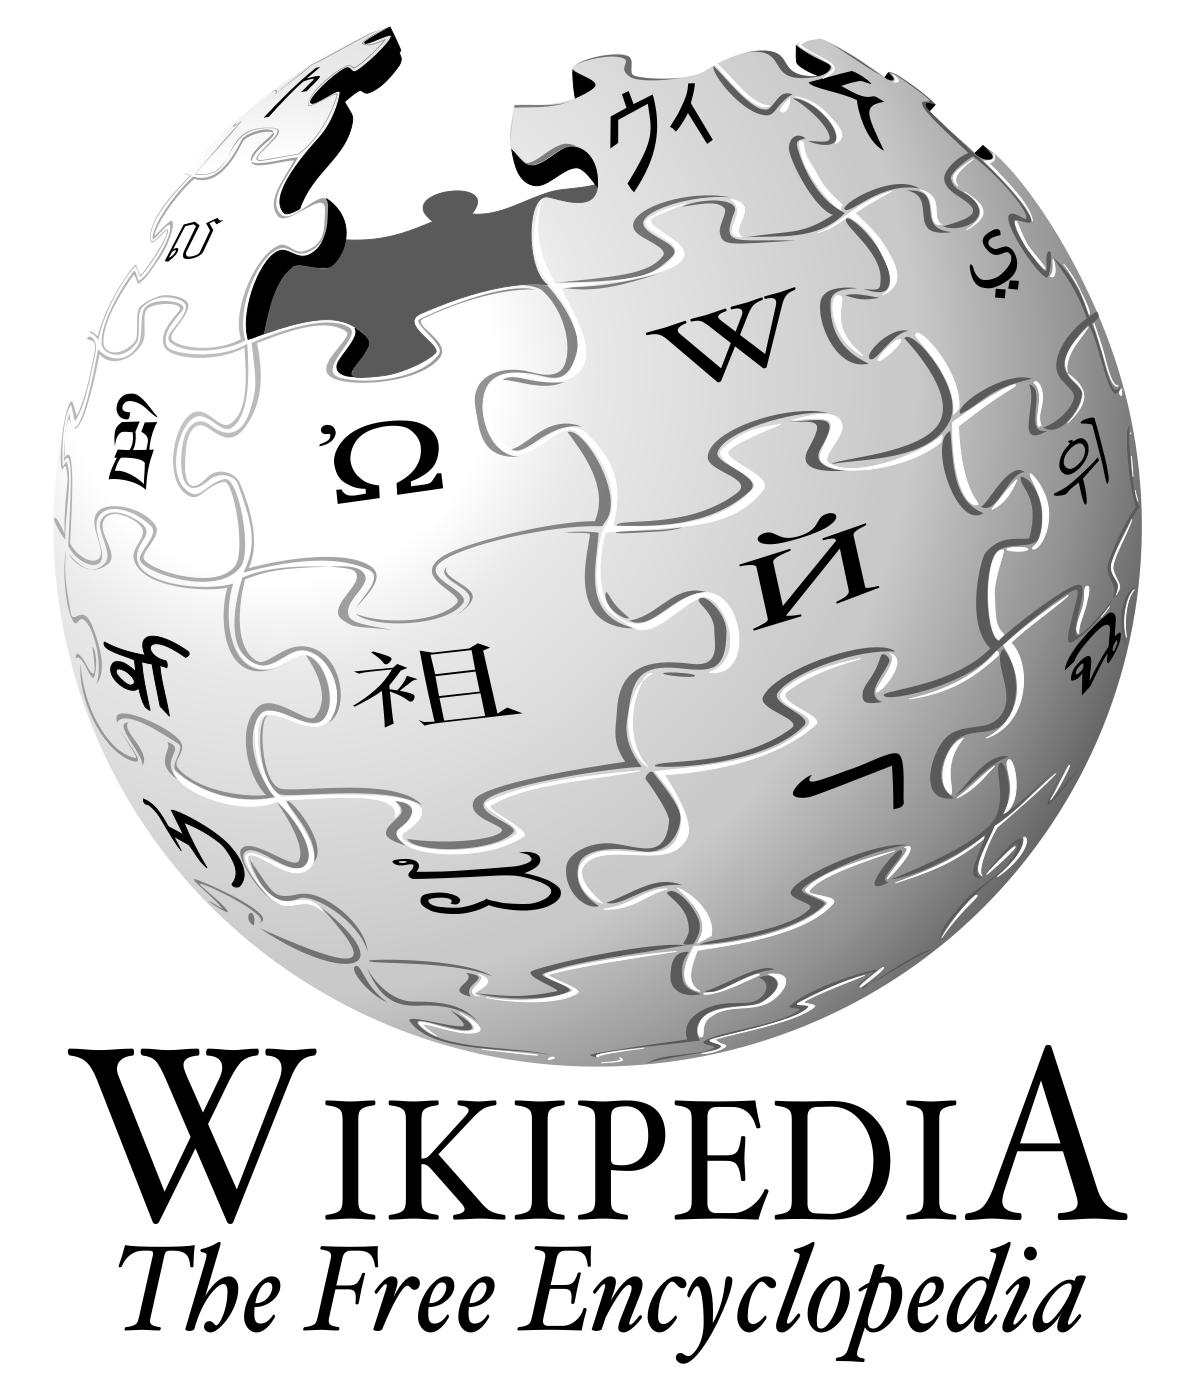 Https ru wikipedia org wiki интернет. Википедия картинки. Википедия логотип. Значок Википедии. Ремипедия.